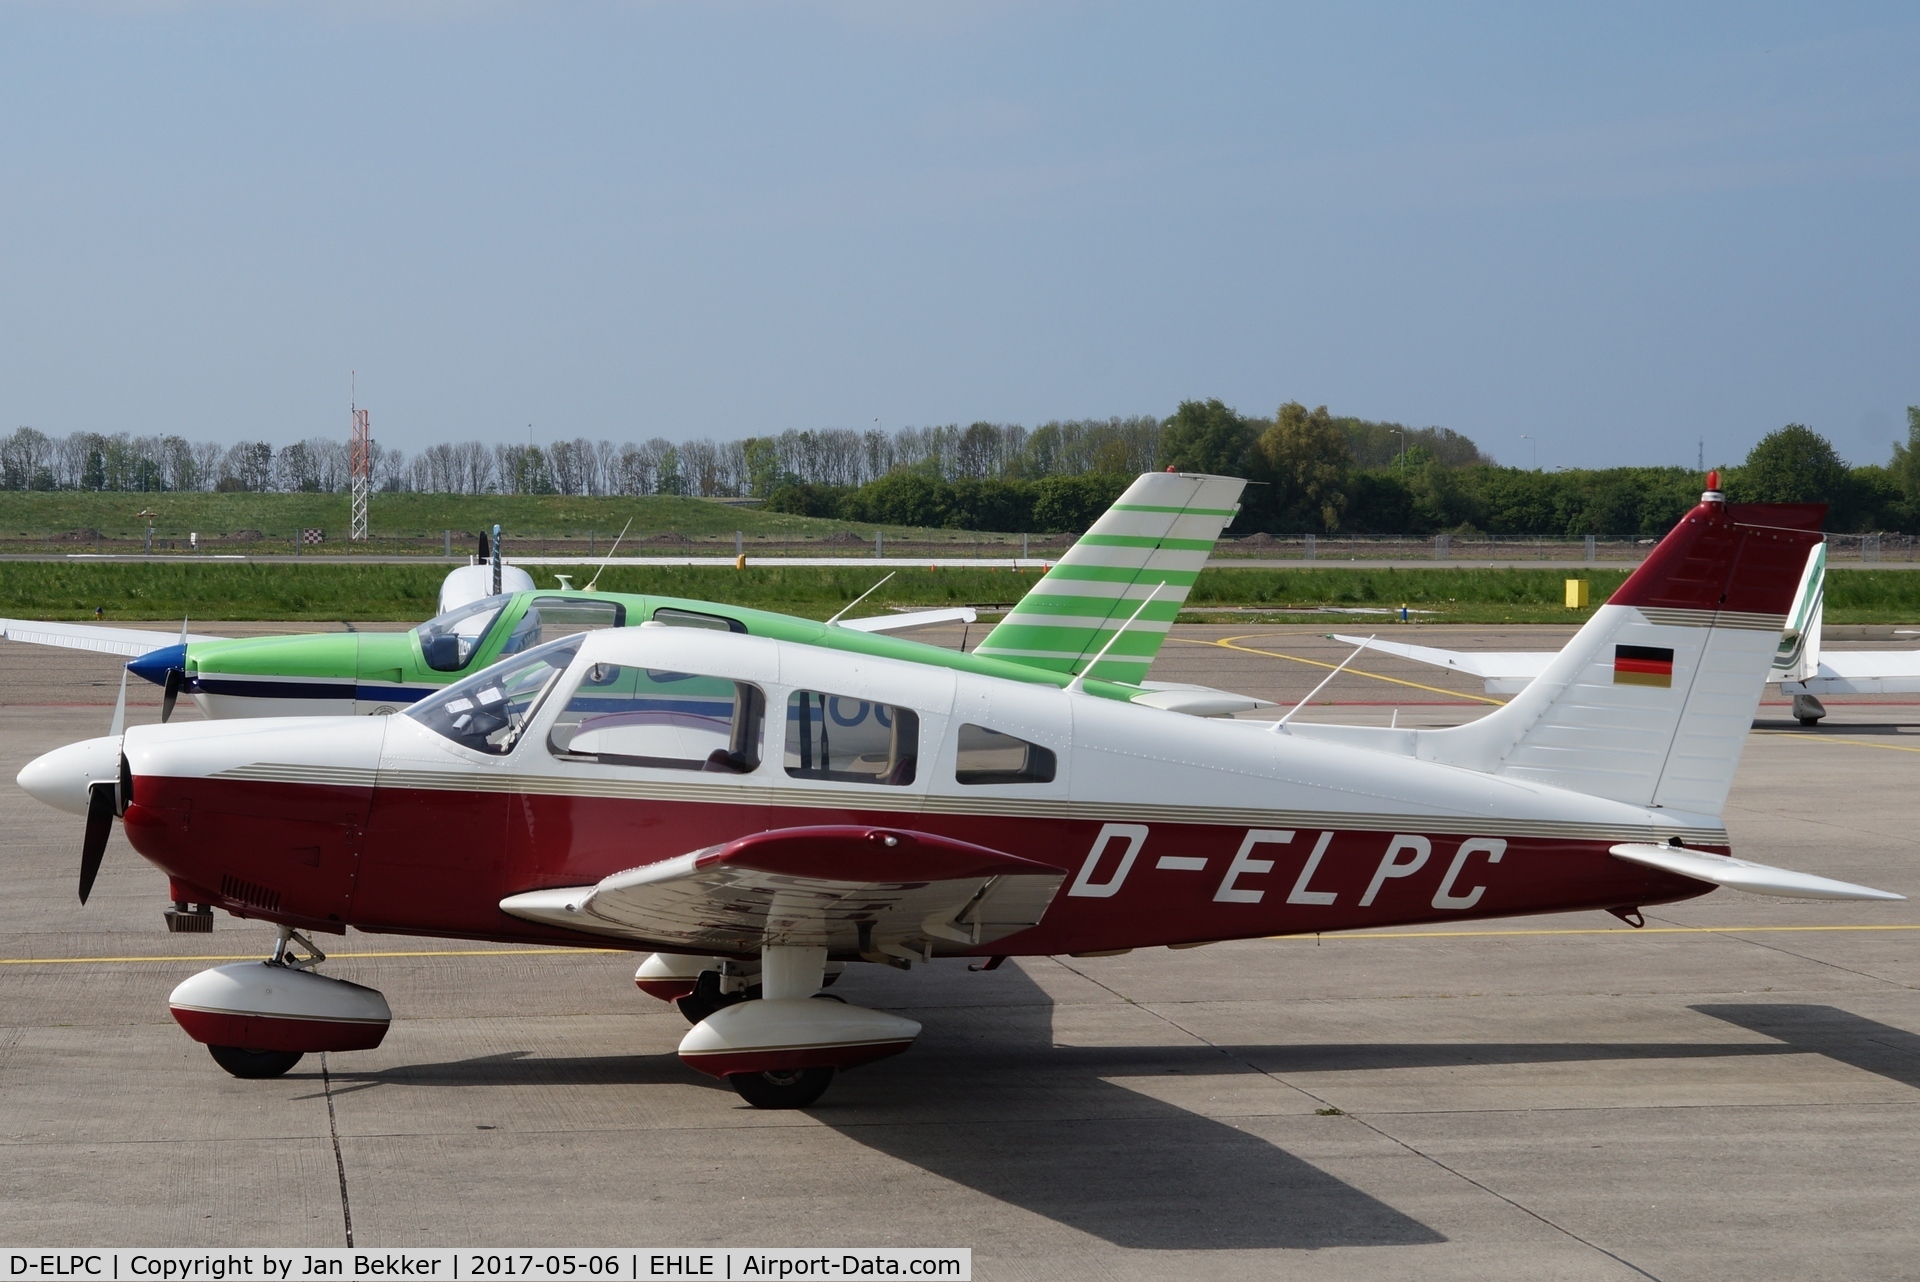 D-ELPC, 1978 Piper PA-28-181 Archer II C/N 28-7790292, Lelystad Airport